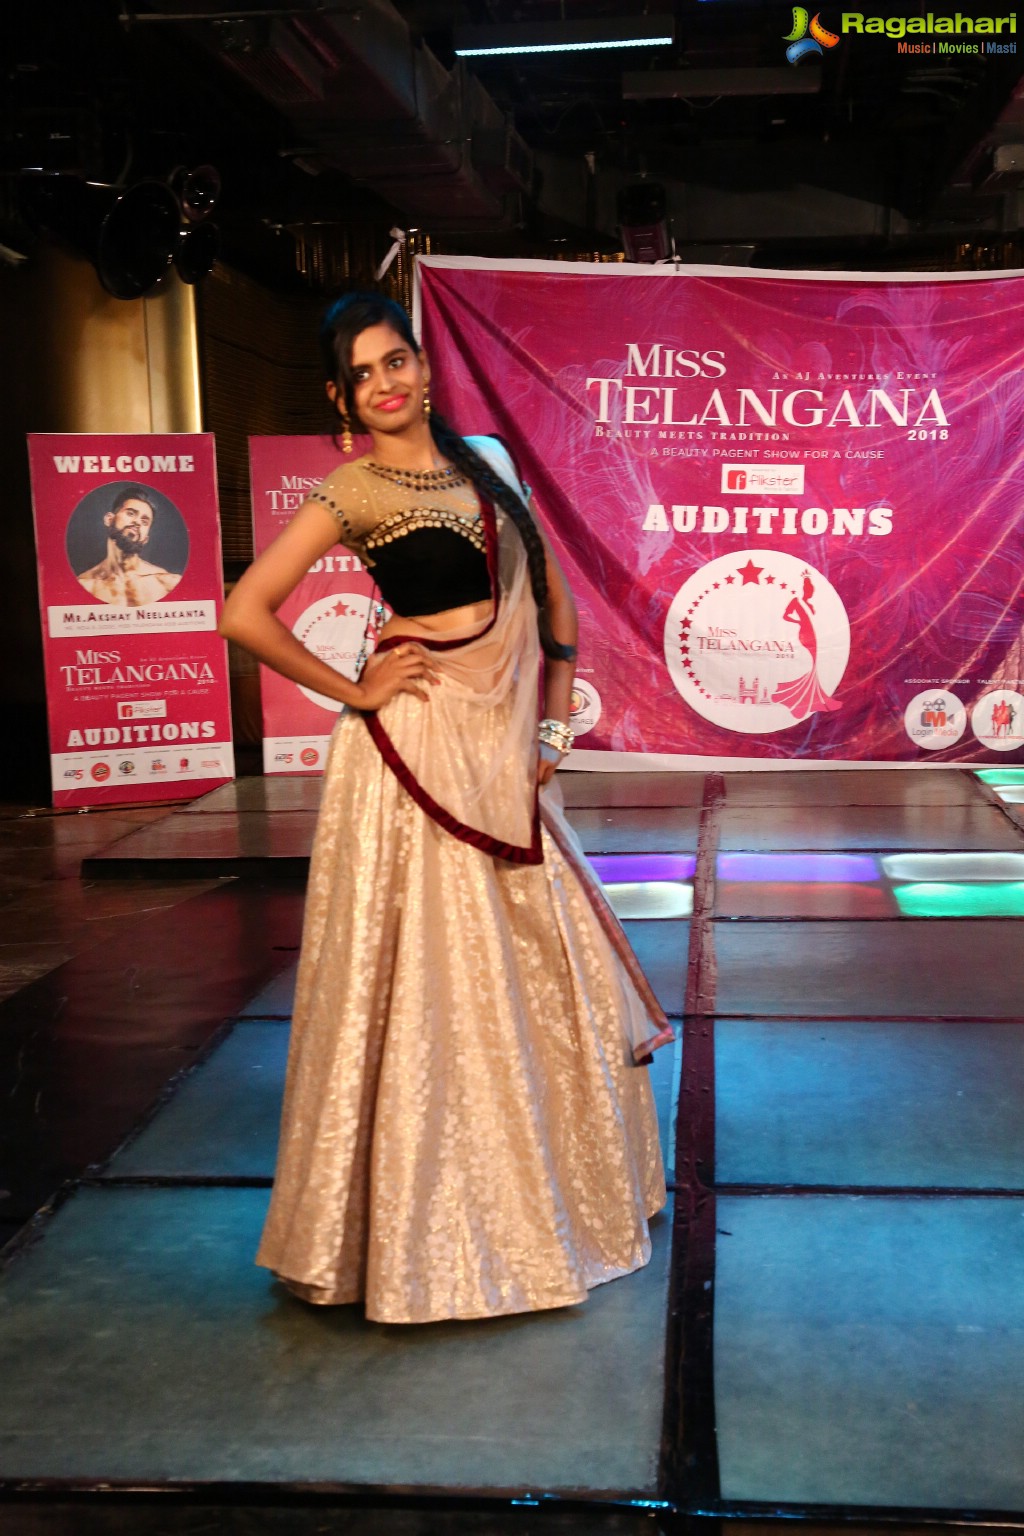 Miss Telangana 2018 Auditions at The Park Hotel